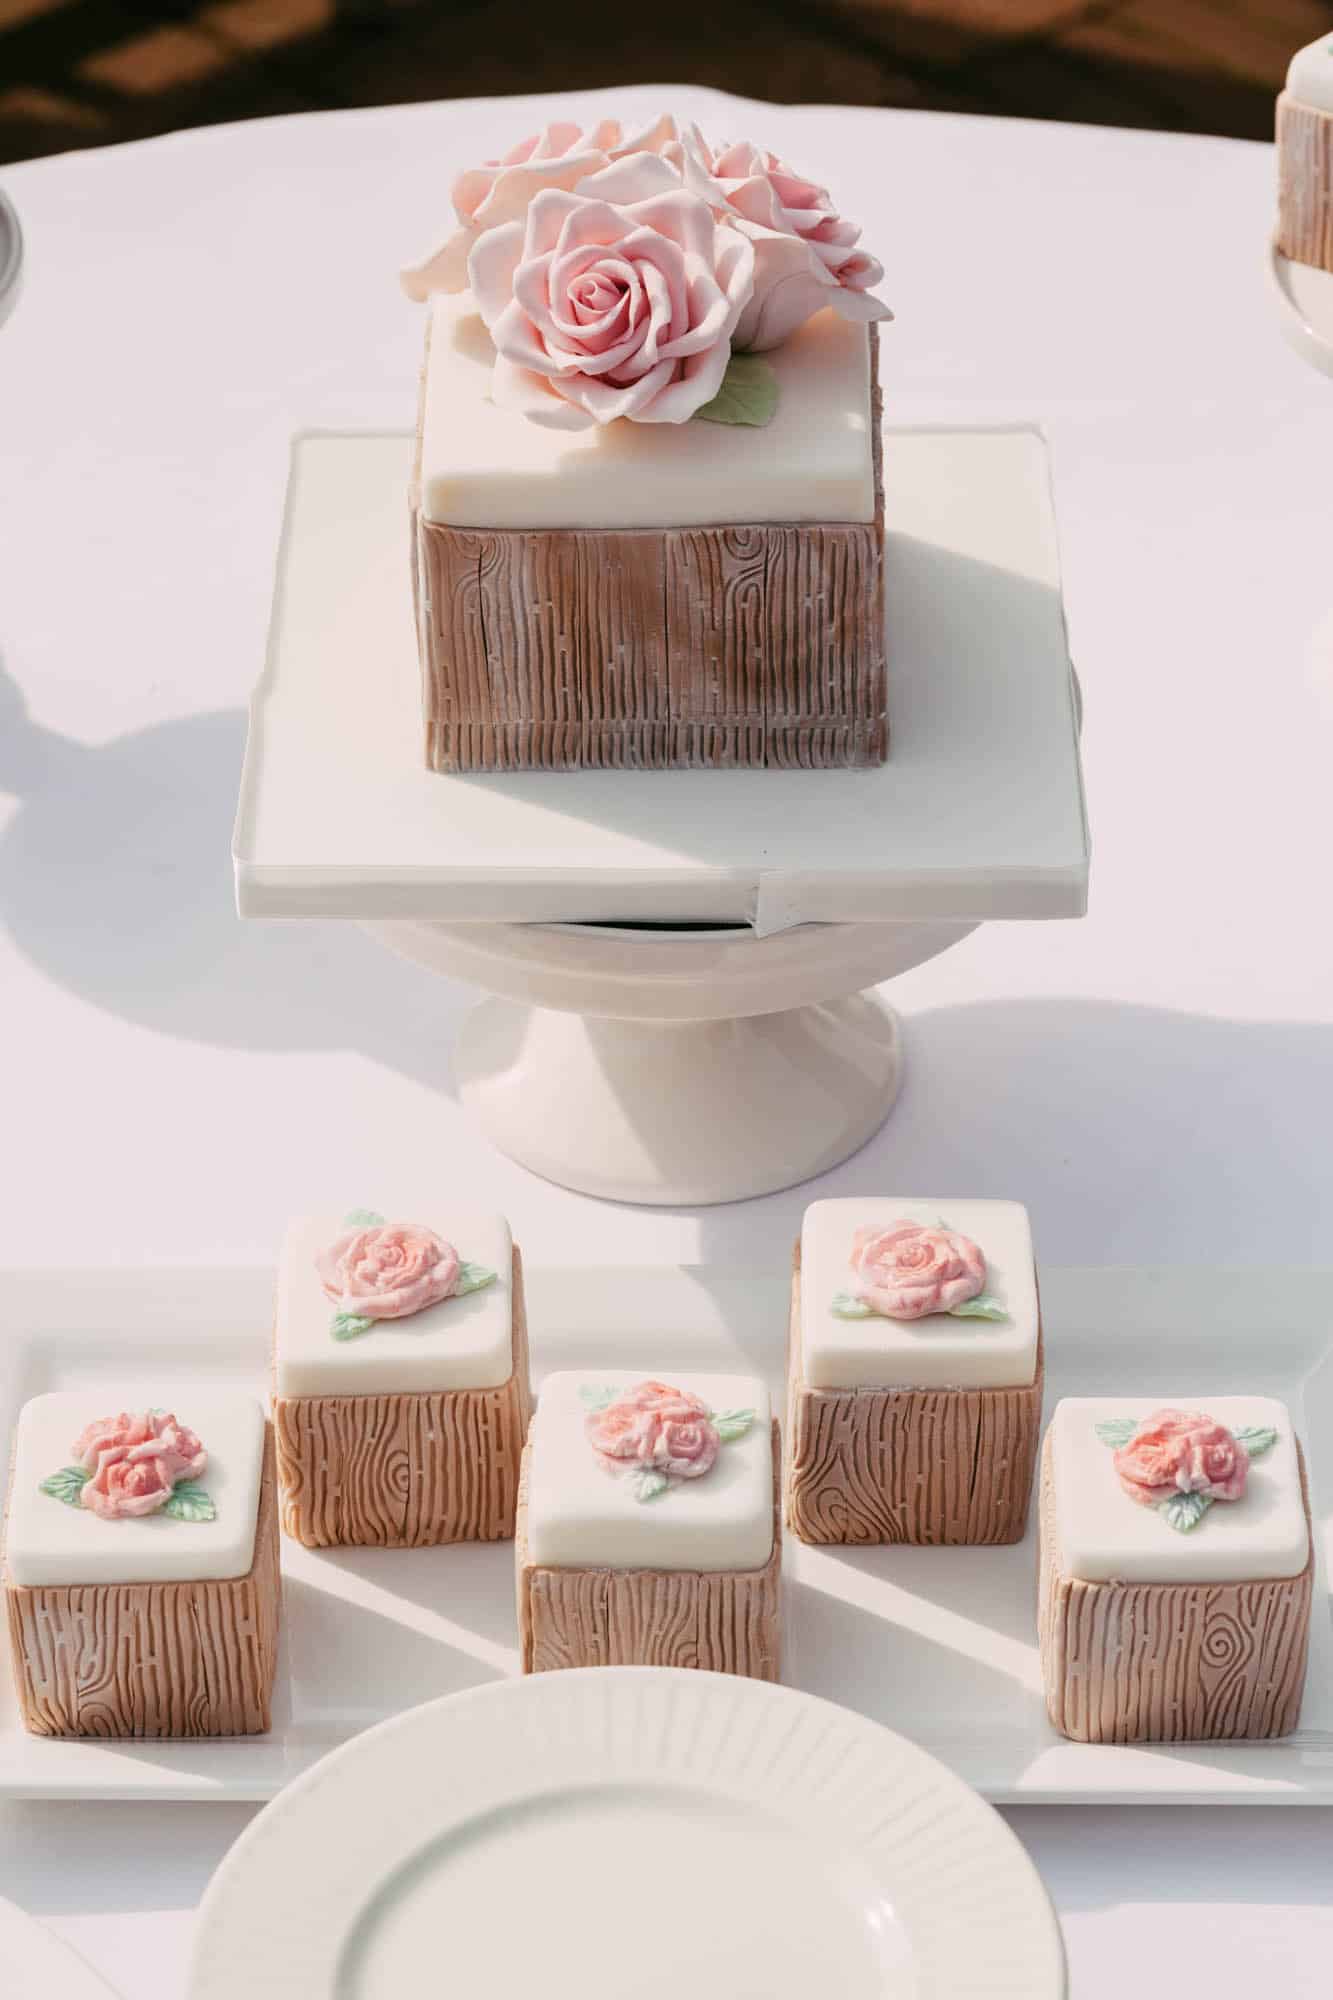 wedding cake with roses